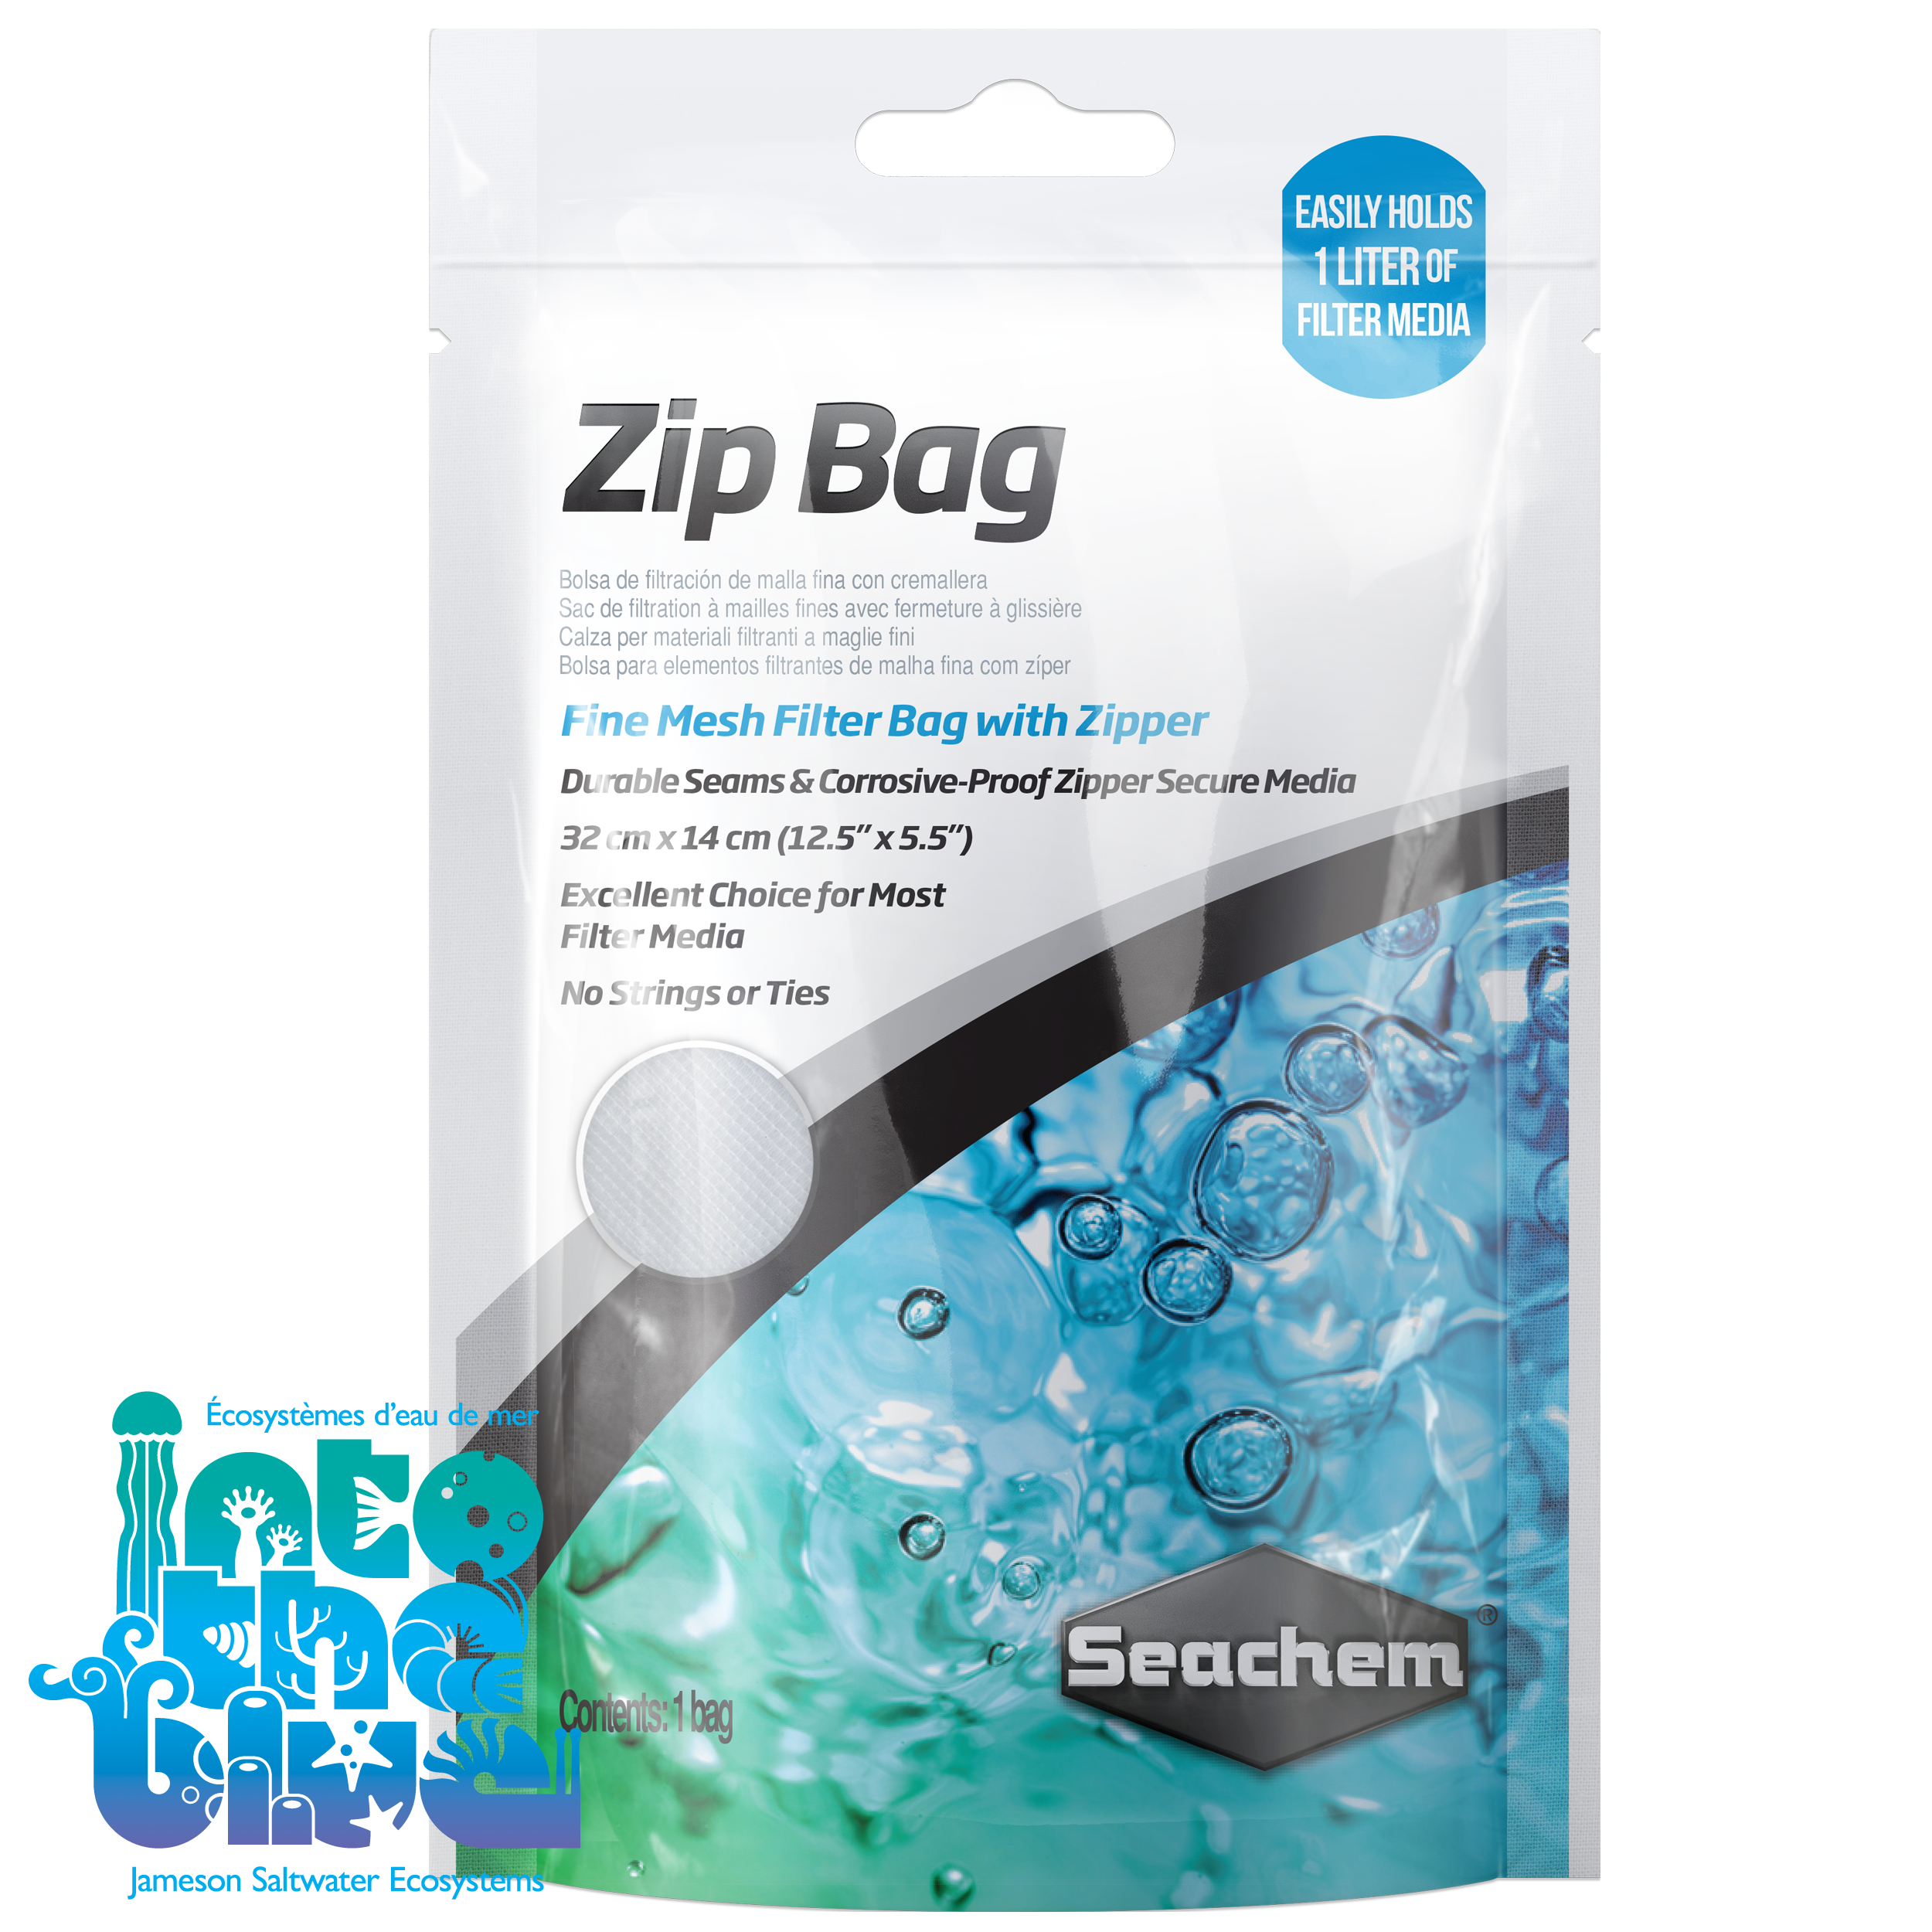 Seachem - Zip Bag